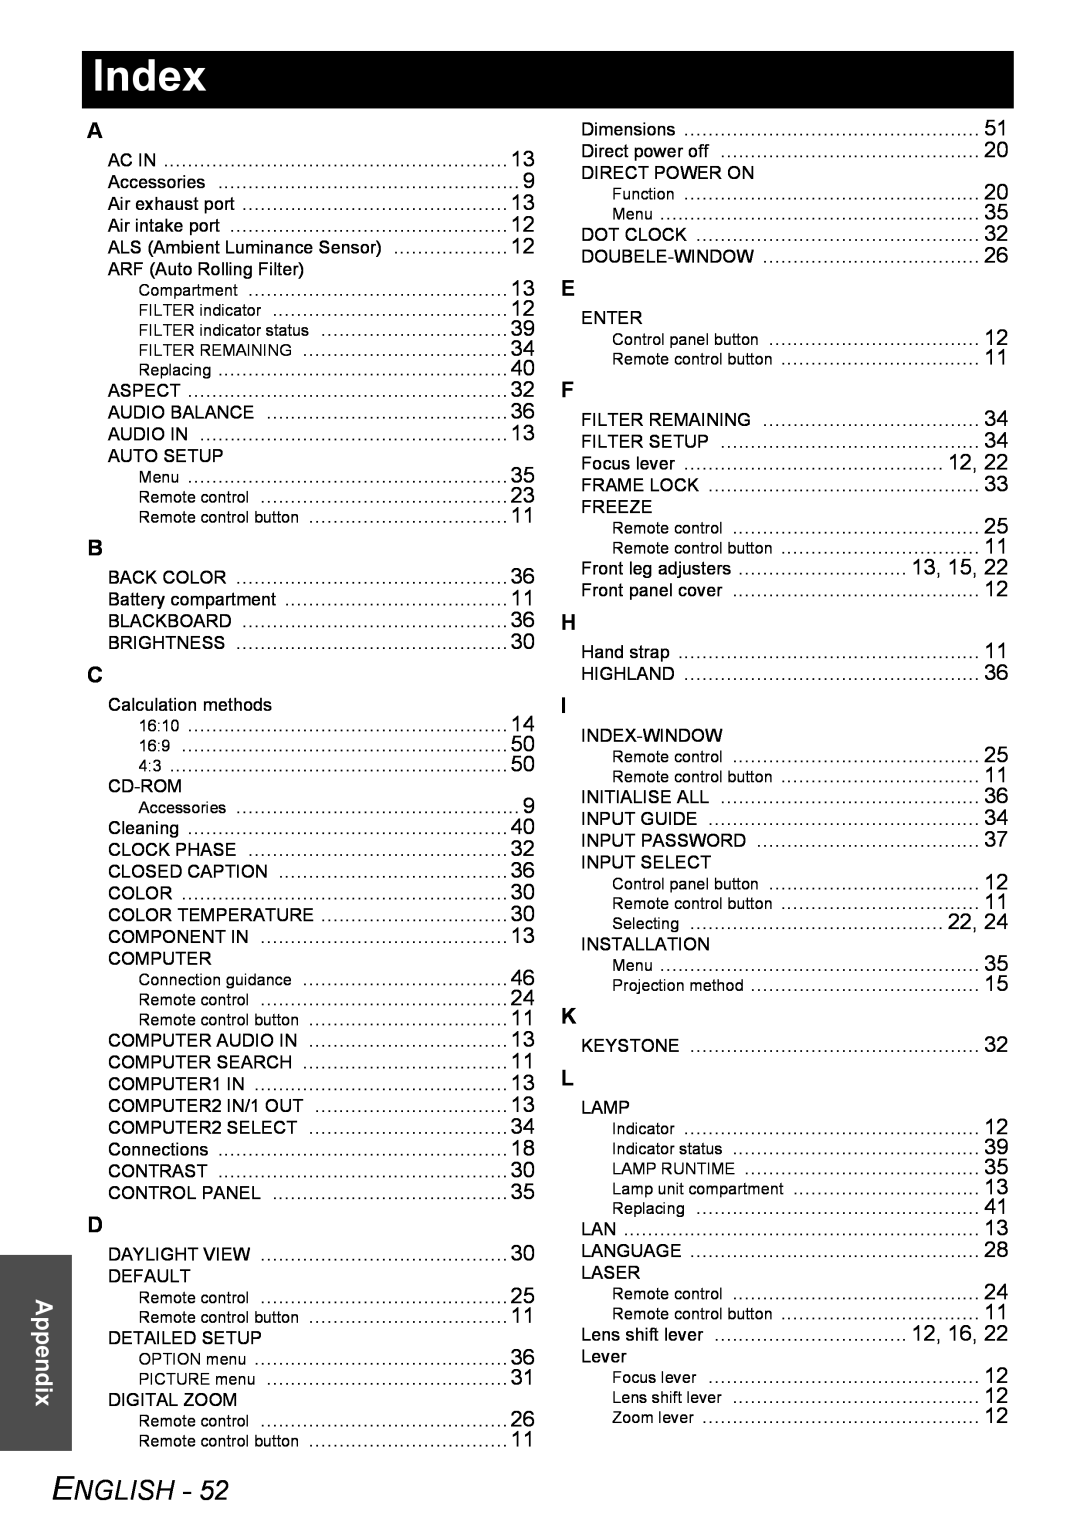 Panasonic PT-FW100NTU manual Index, English, Appendix, Filter Remaining, Initialise All, Selecting, Lamp unit compartment 